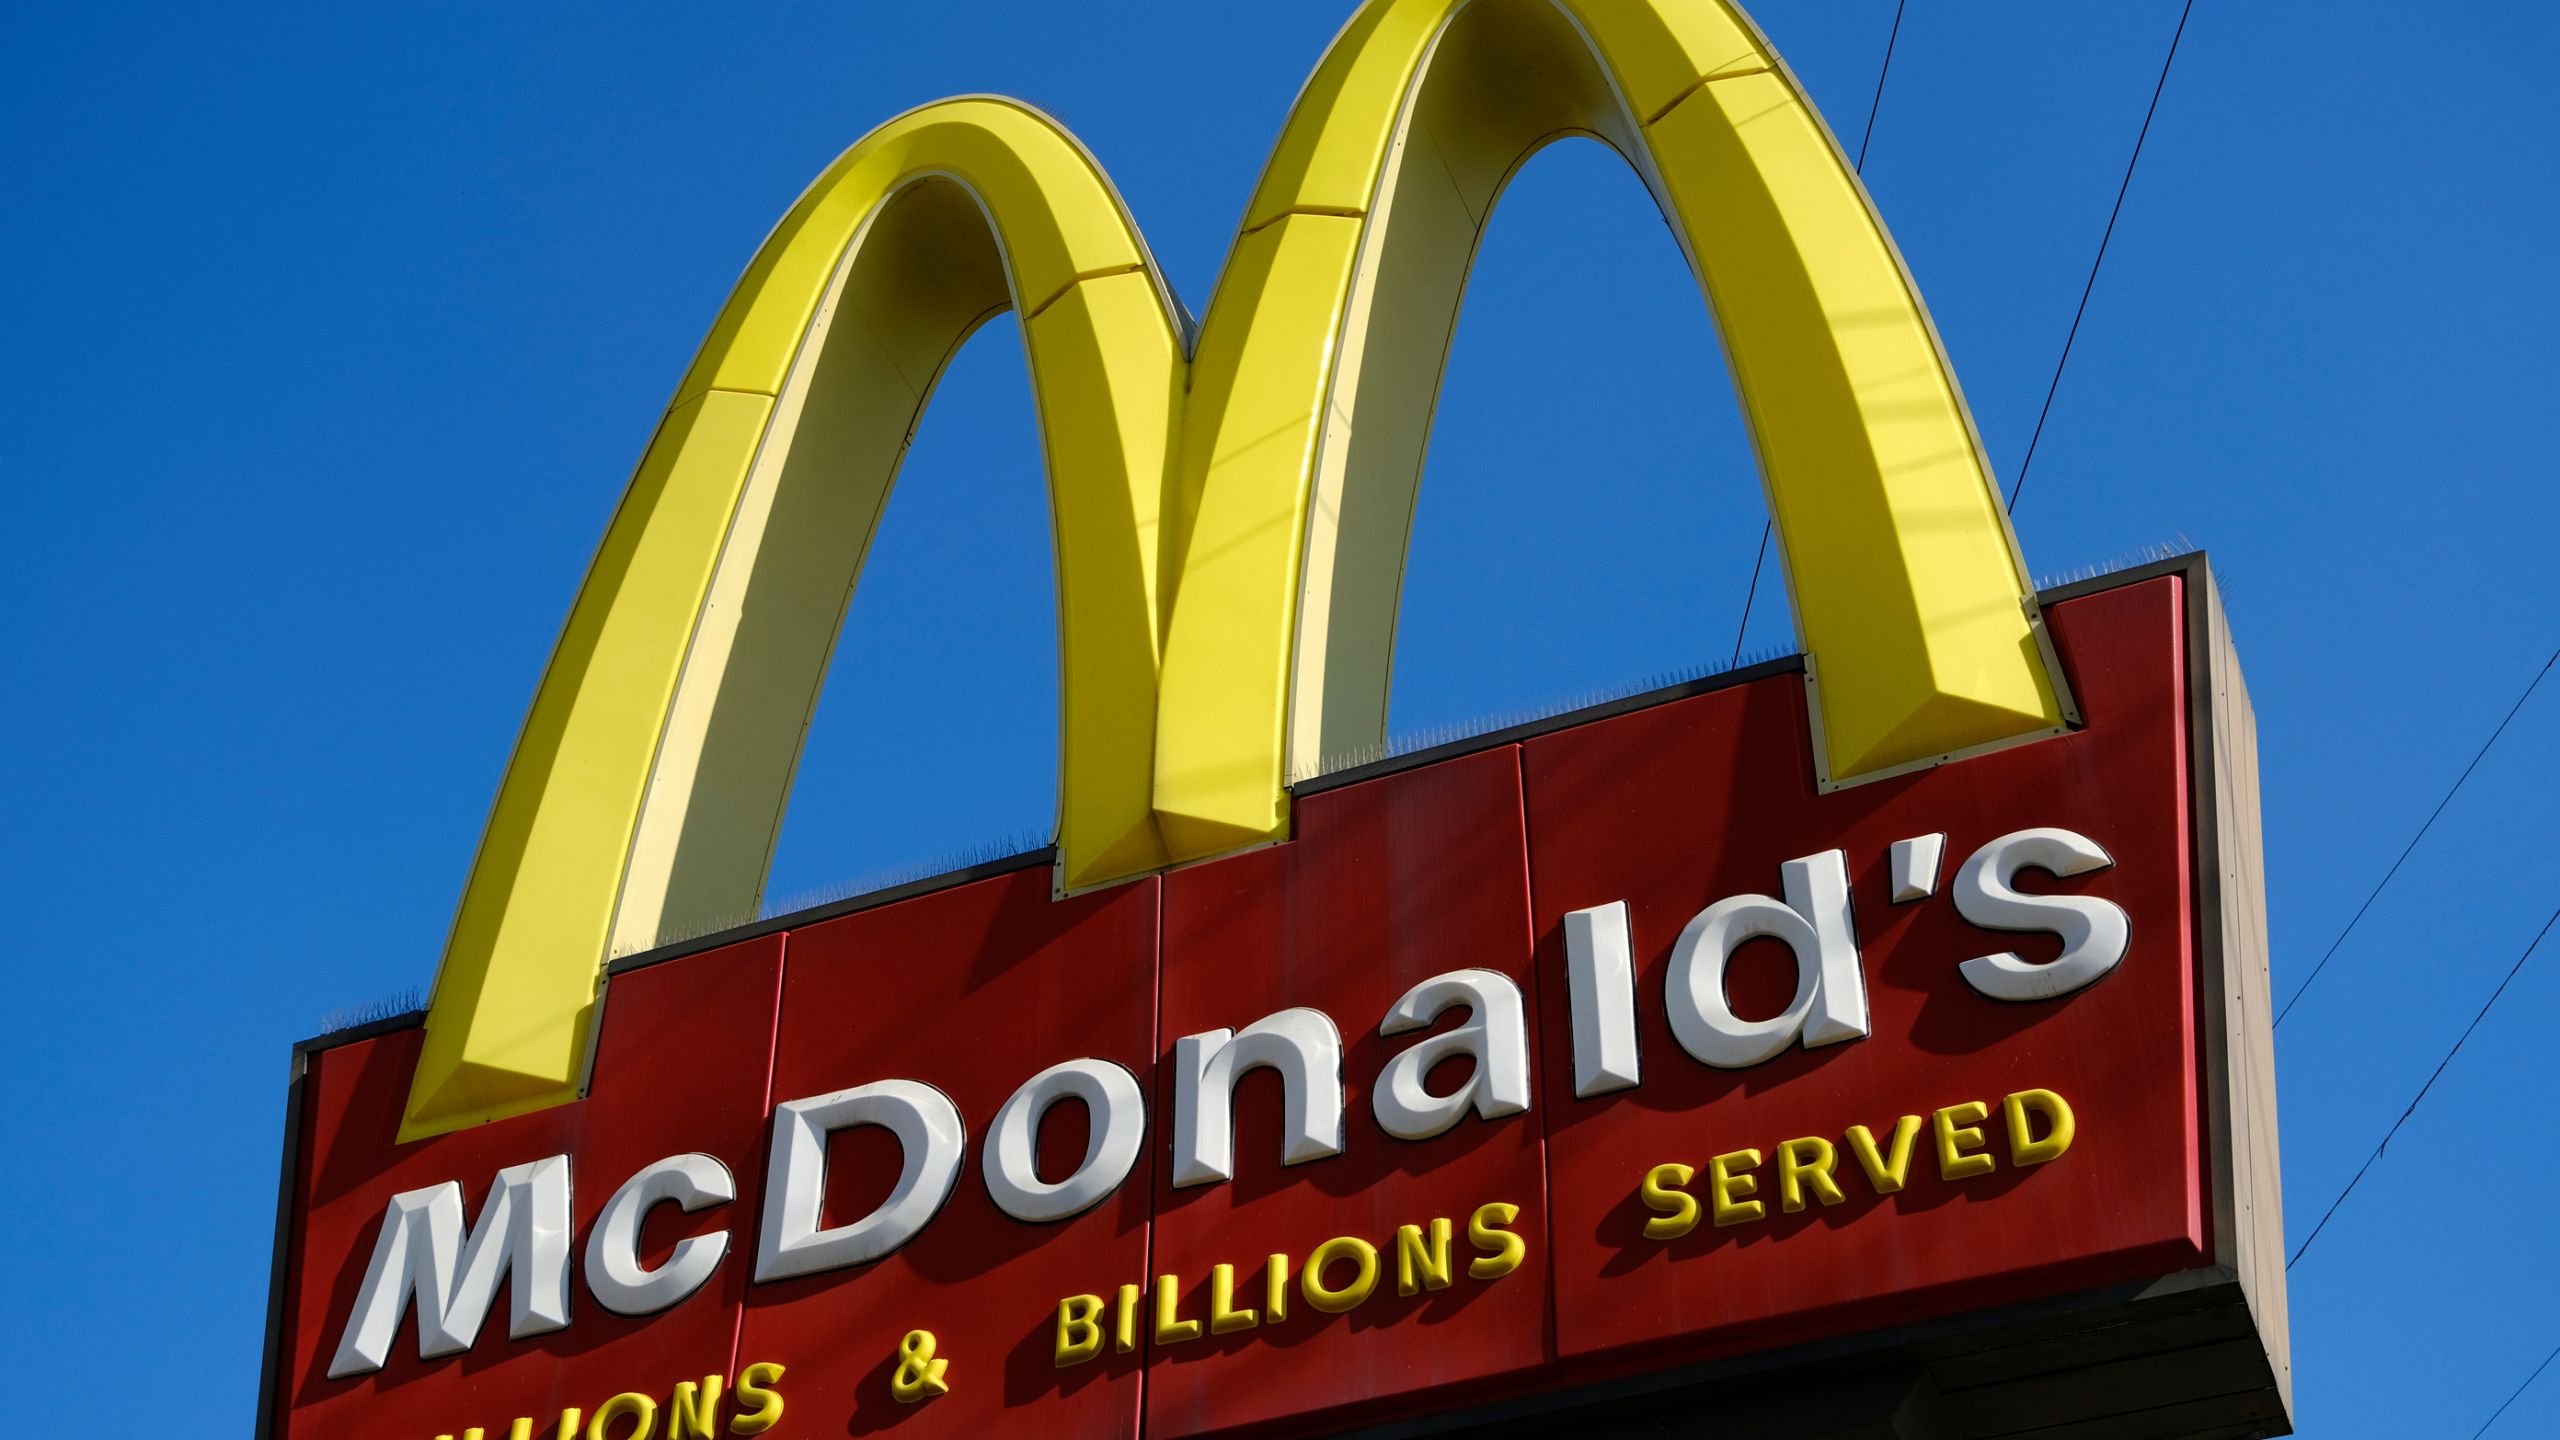 McDonald's Plans To Close 200 US Restaurants This Year Amid Coronavirus Fueled Slump. WFRV Local 5 Bay, Appleton